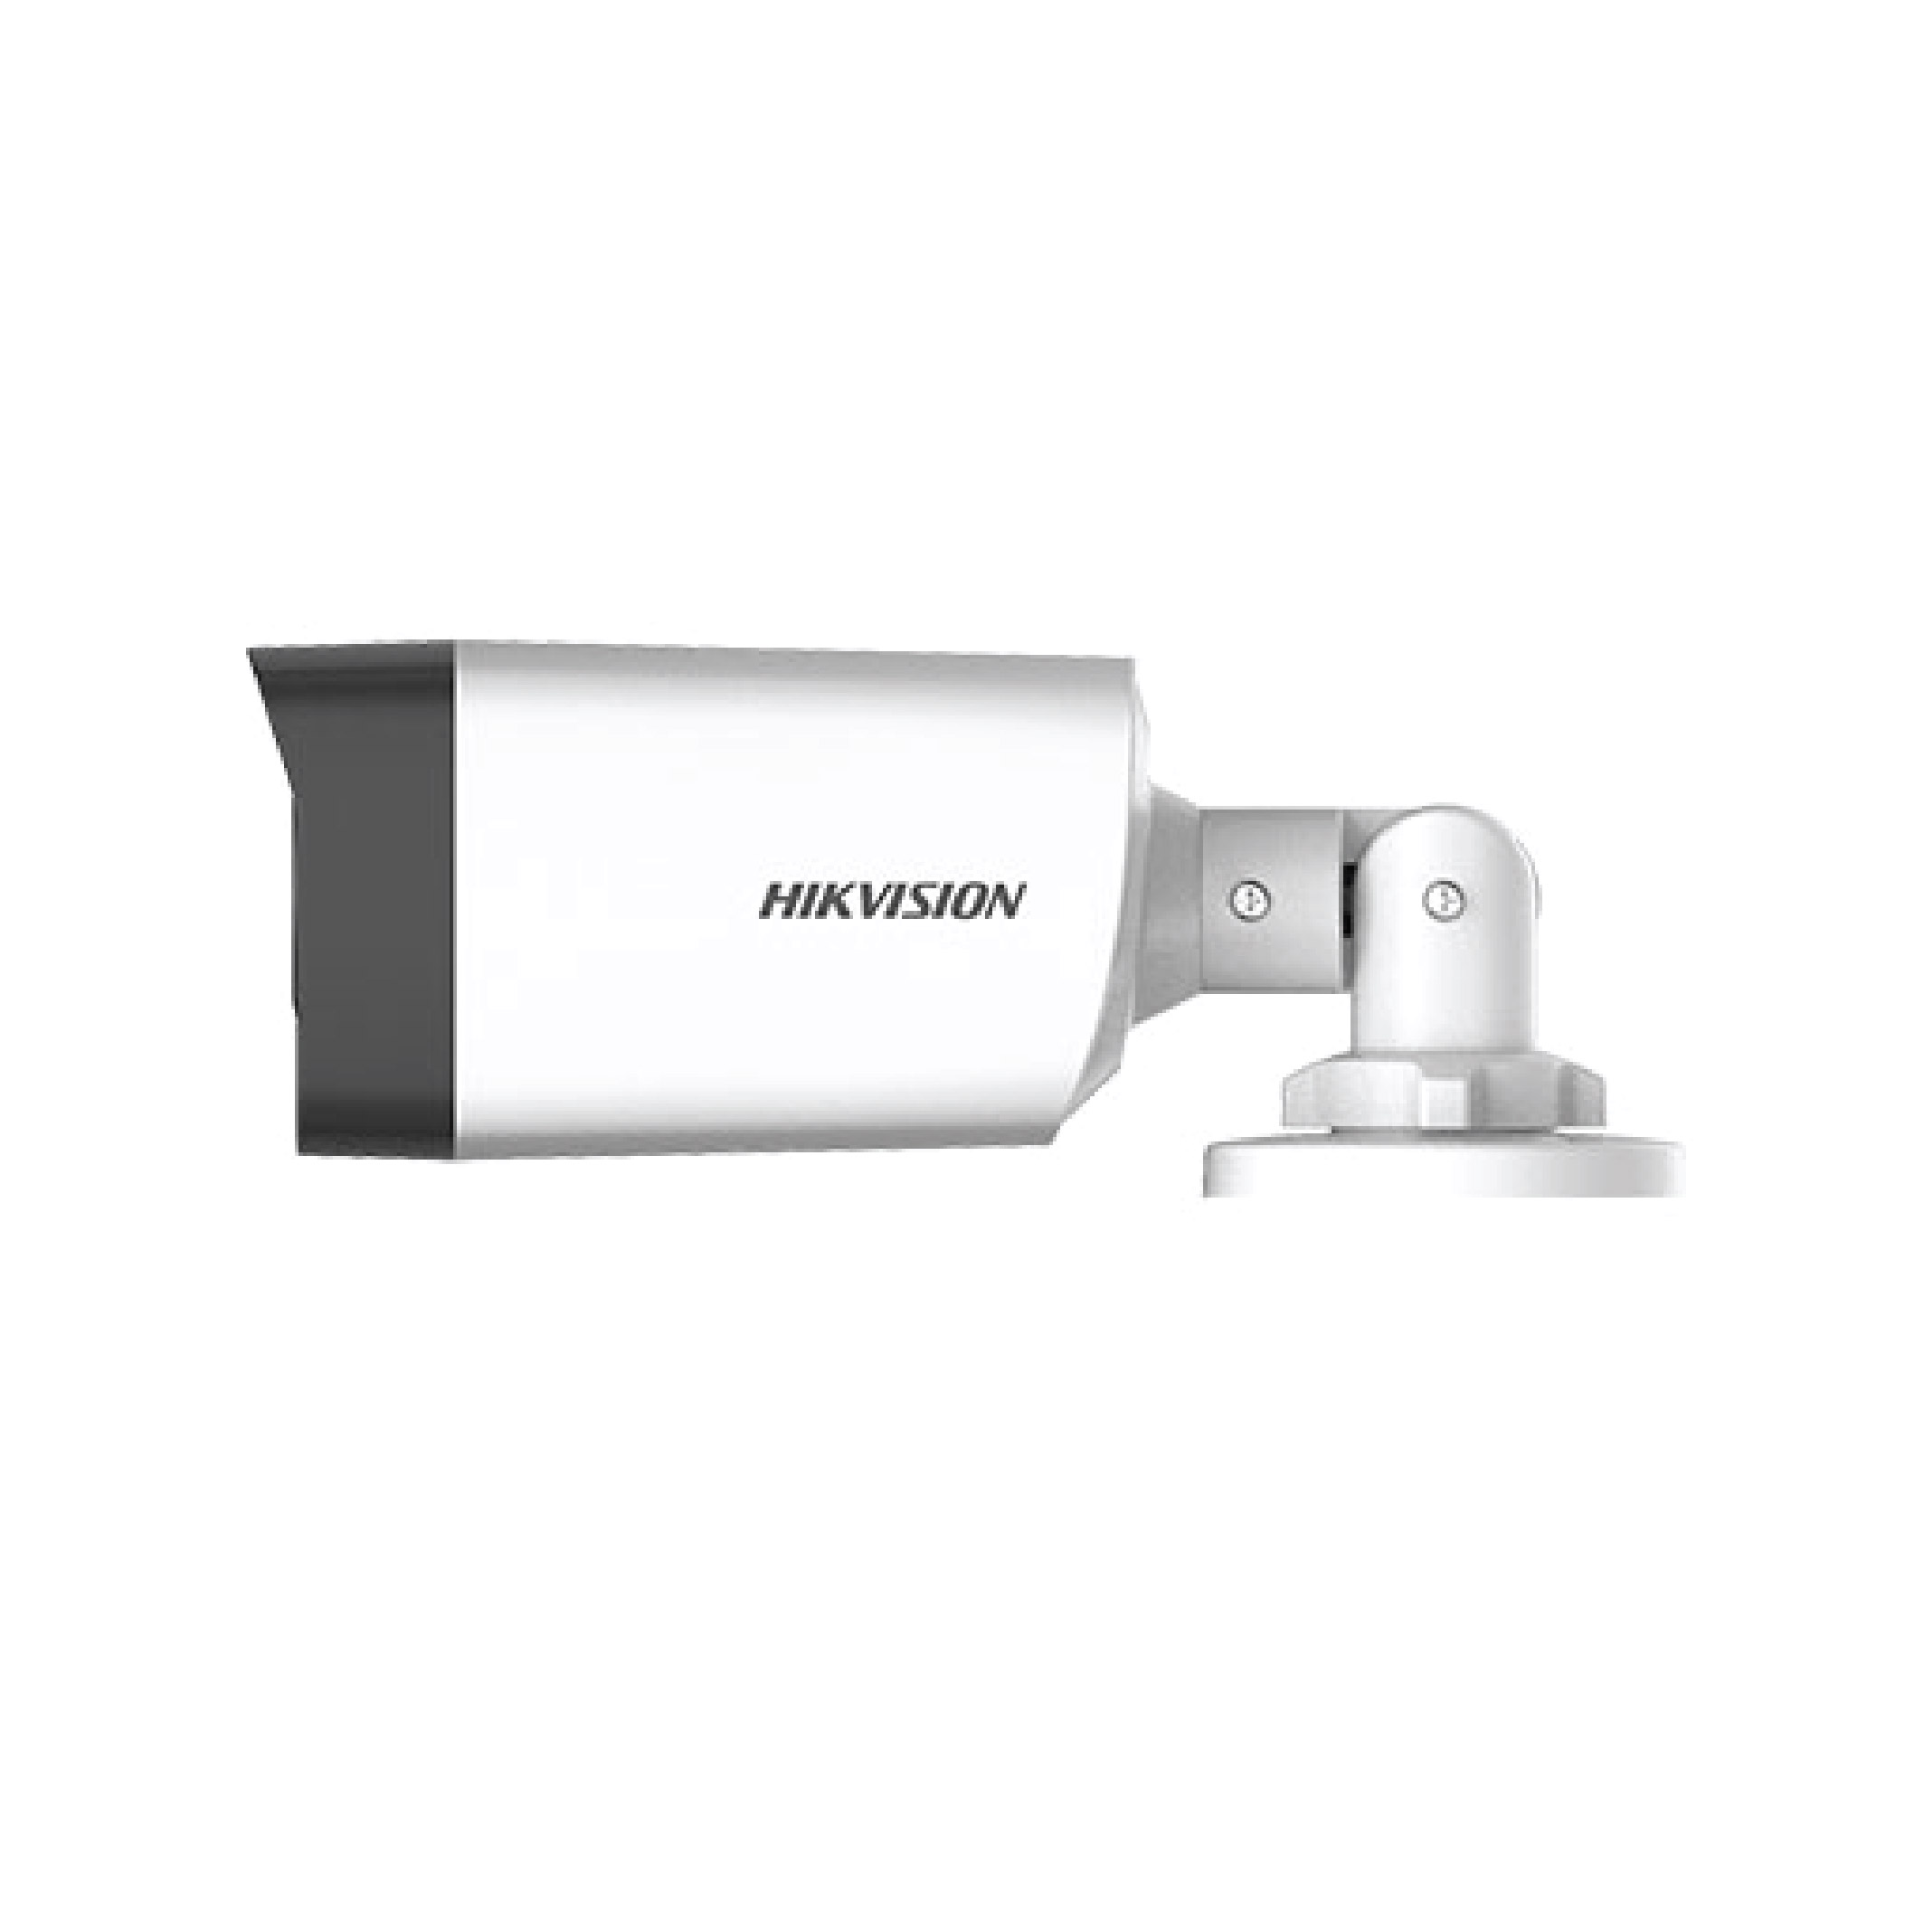 HIKVISION DS-2CE17D0T-IT3FS Turbo HD Camera